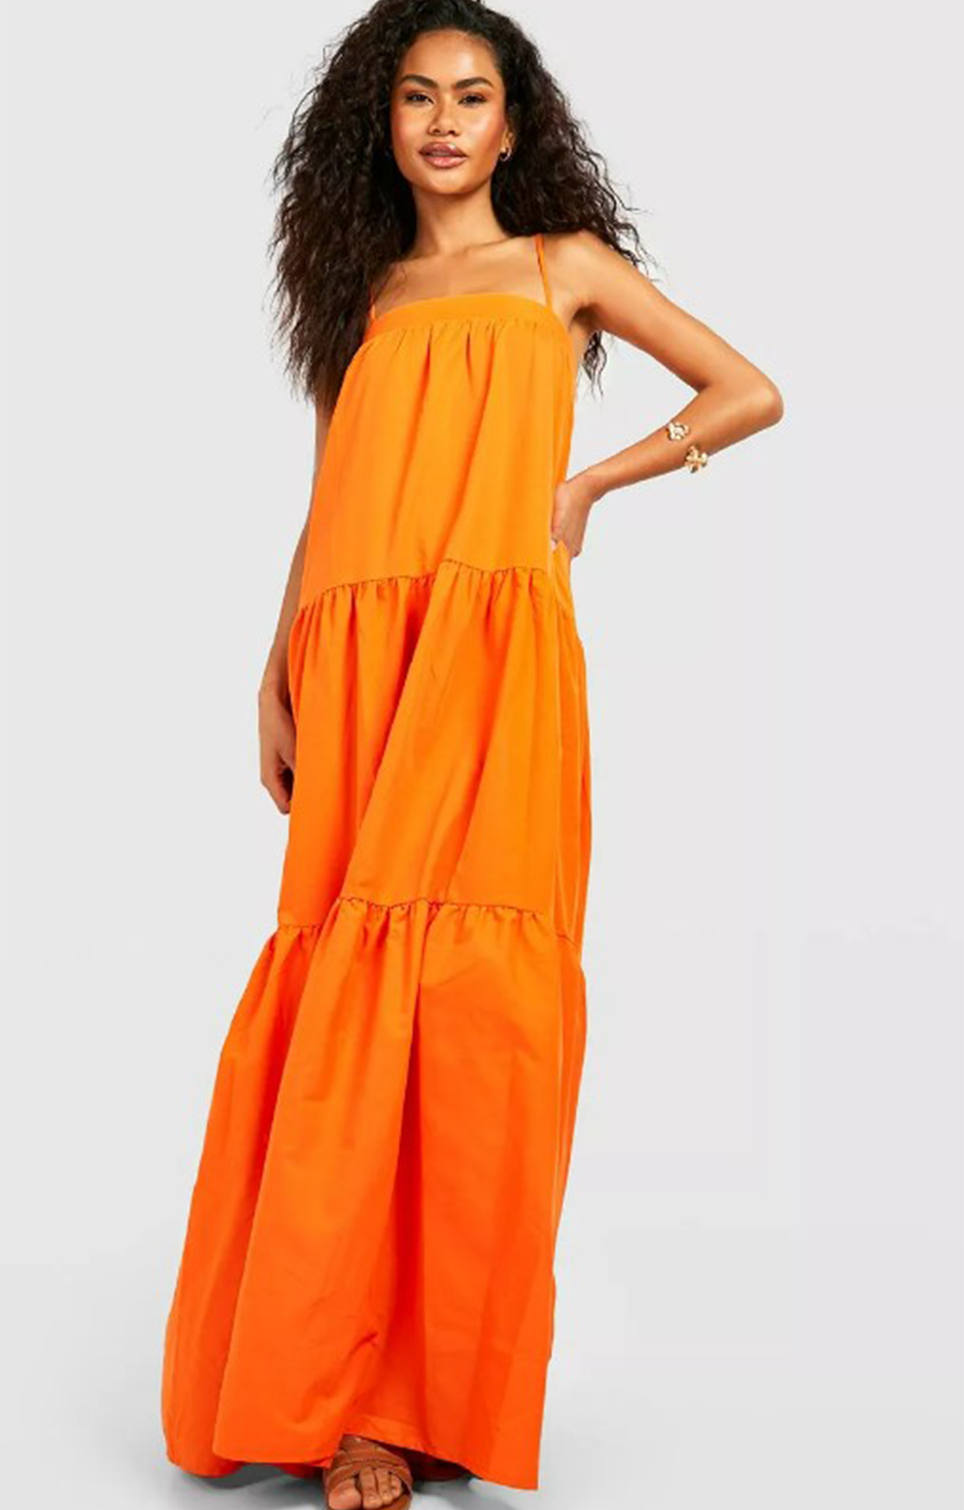 Quirky Orange Dress